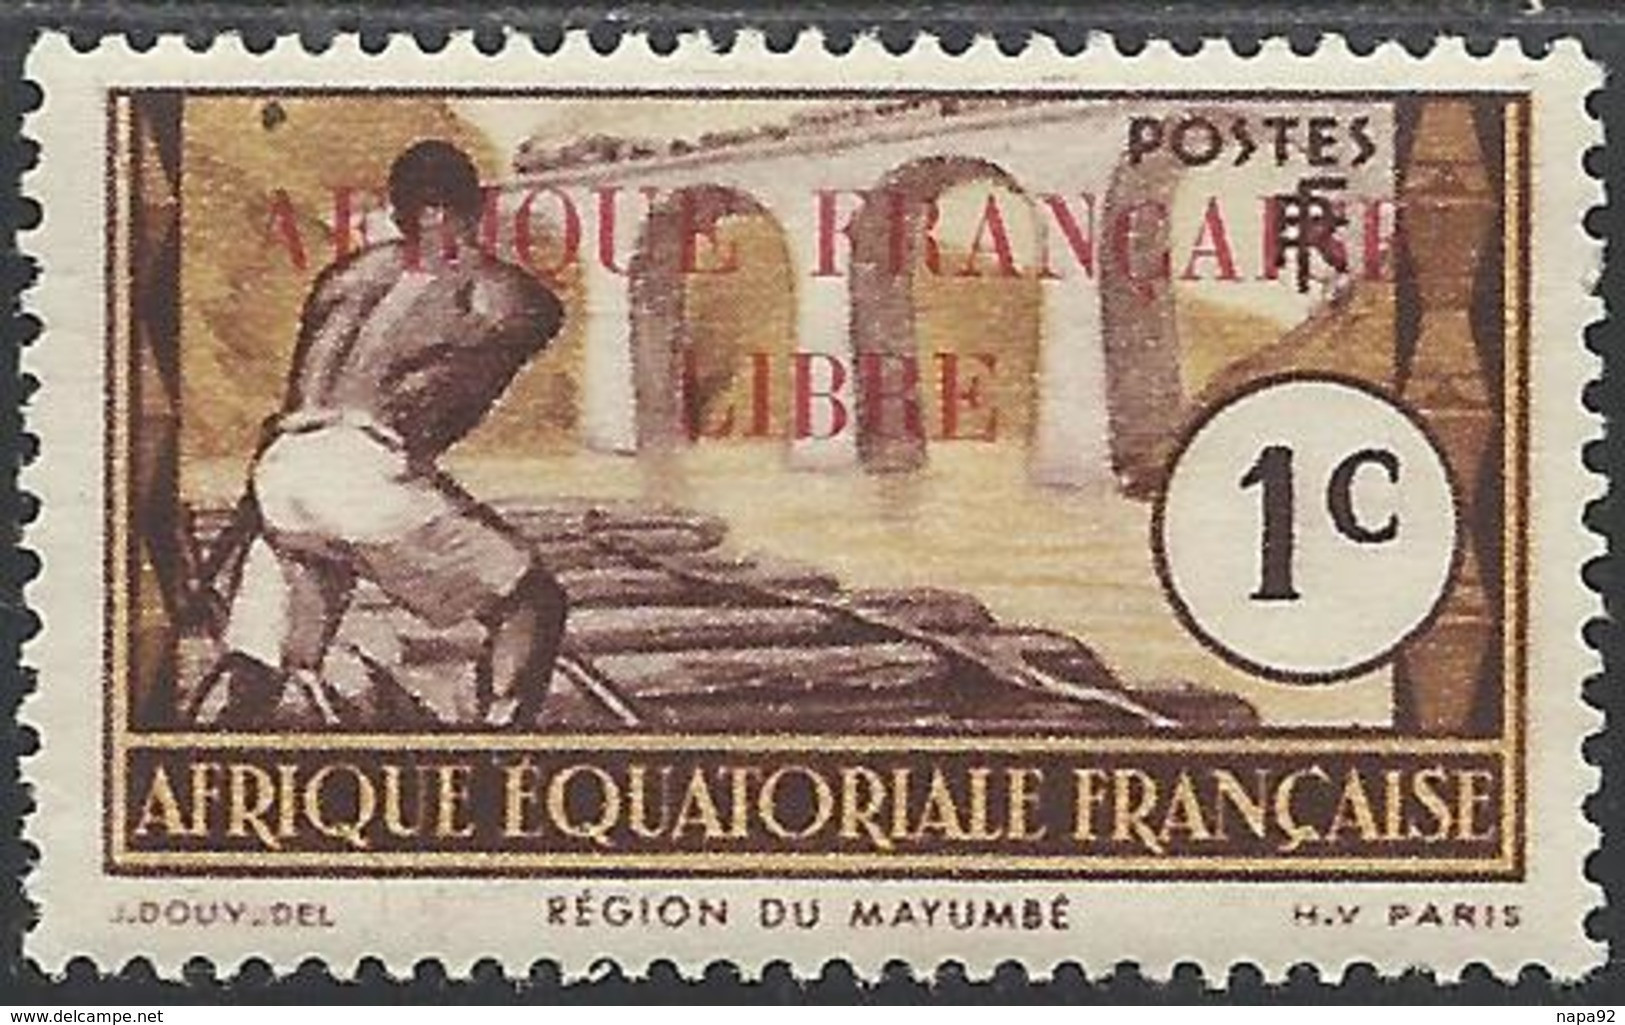 AFRIQUE EQUATORIALE FRANCAISE - AEF - A.E.F. - 1940 - YT 92** - Nuovi